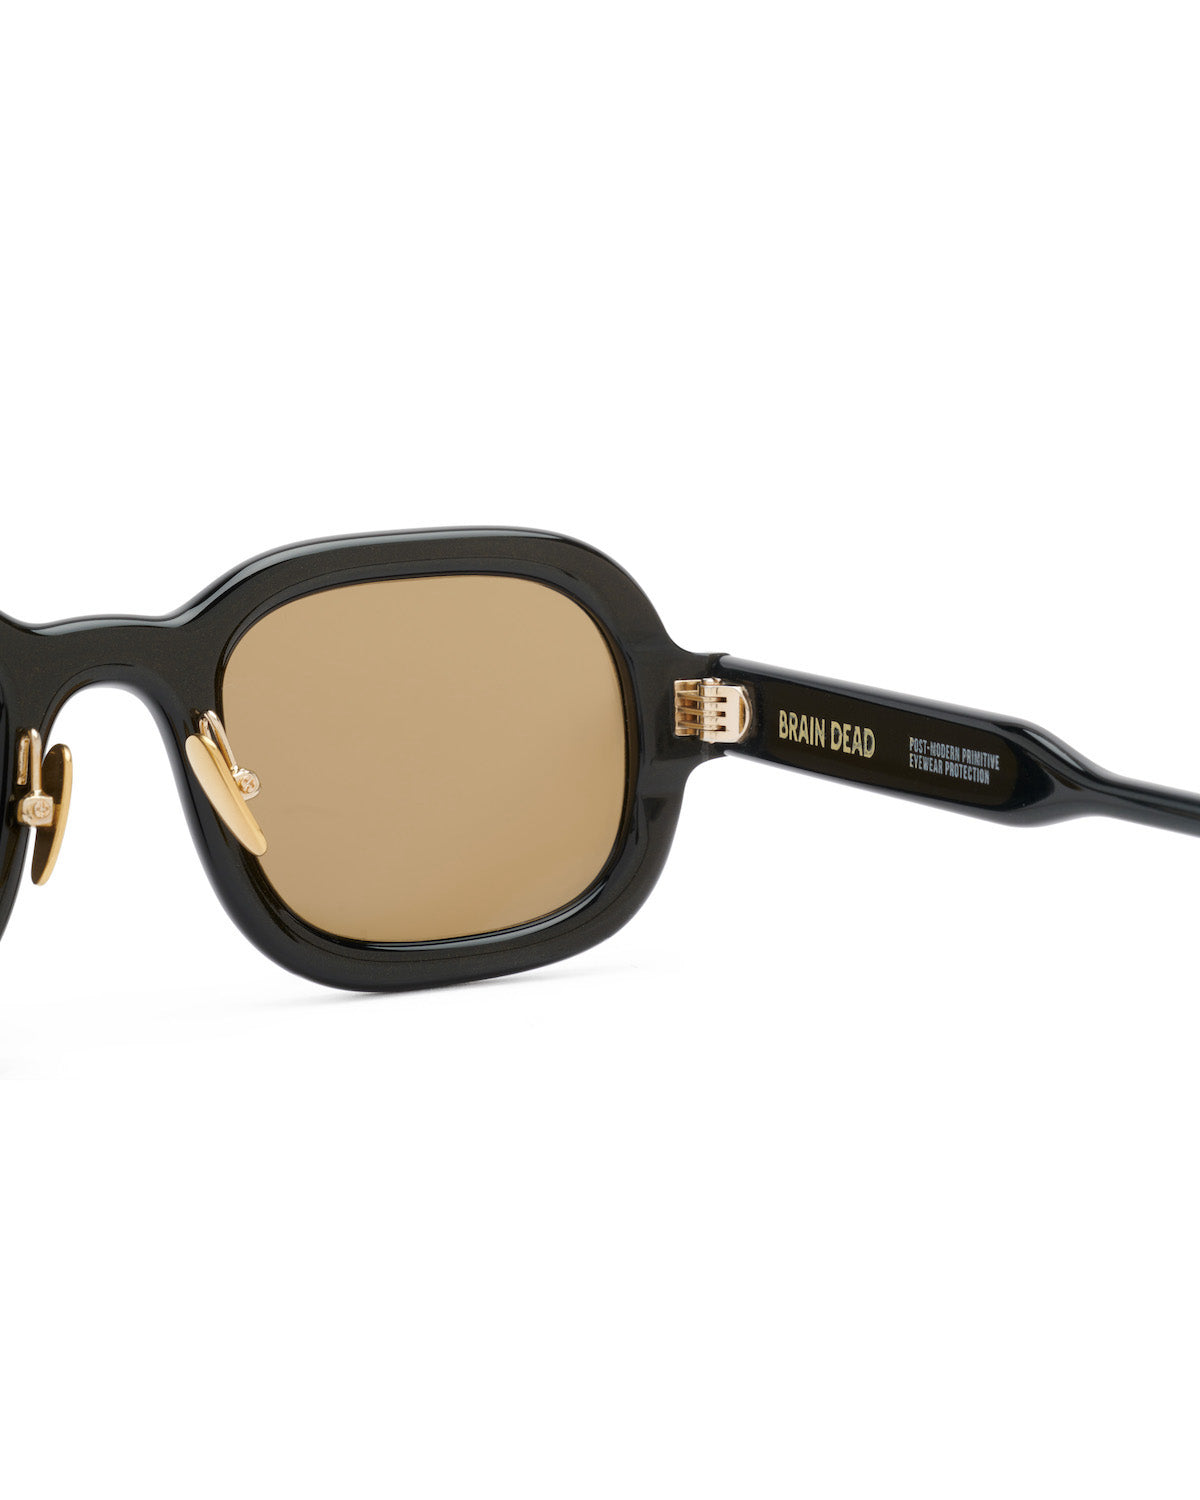 Newman Post Modern Primitive Eye Protection Sunglasses - Black/Brown 3